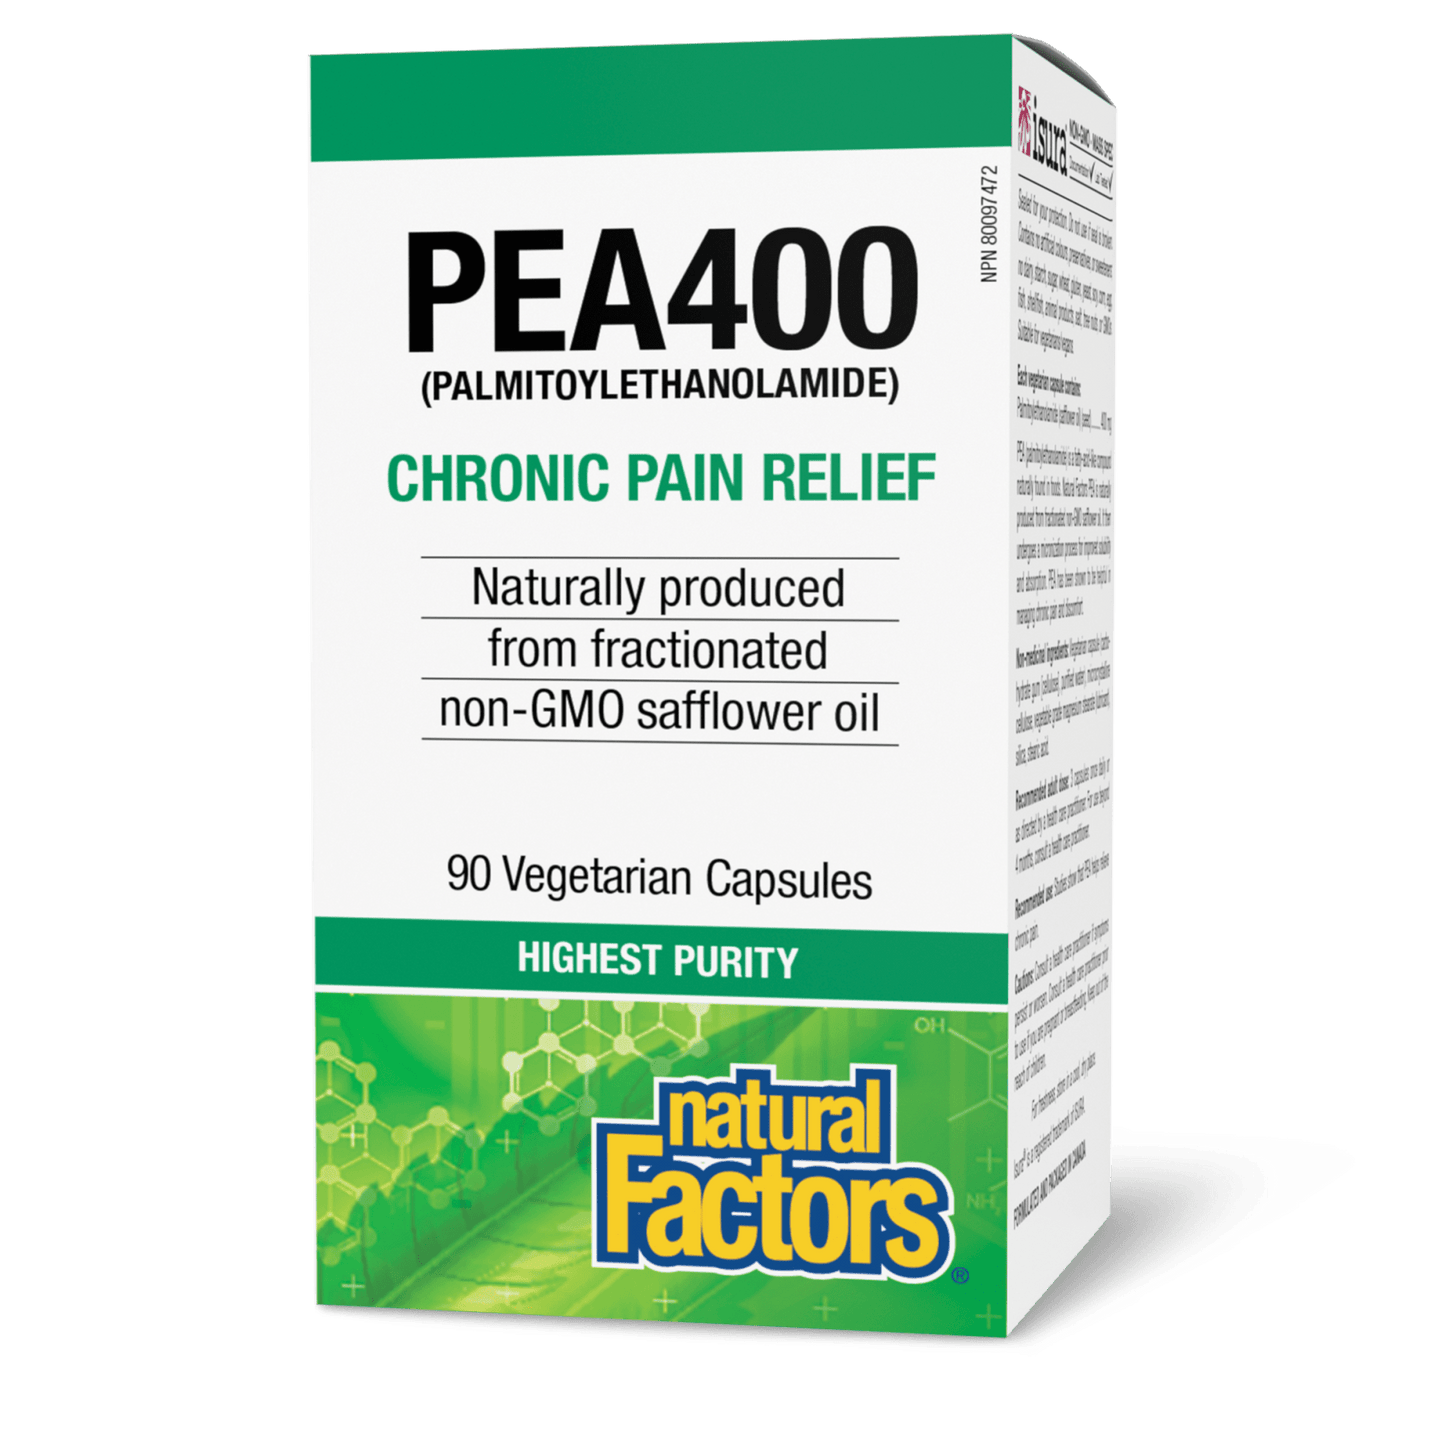 PEA400 Palmitoylethanolamide, Natural Factors|v|image|2700